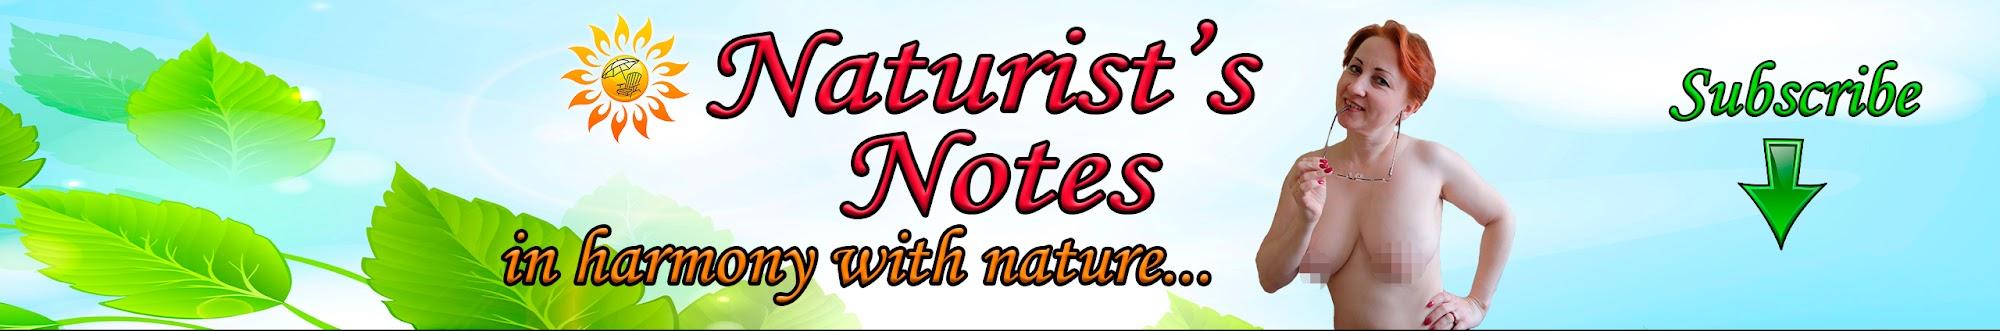 Naturist's notes, Mila naturist. 